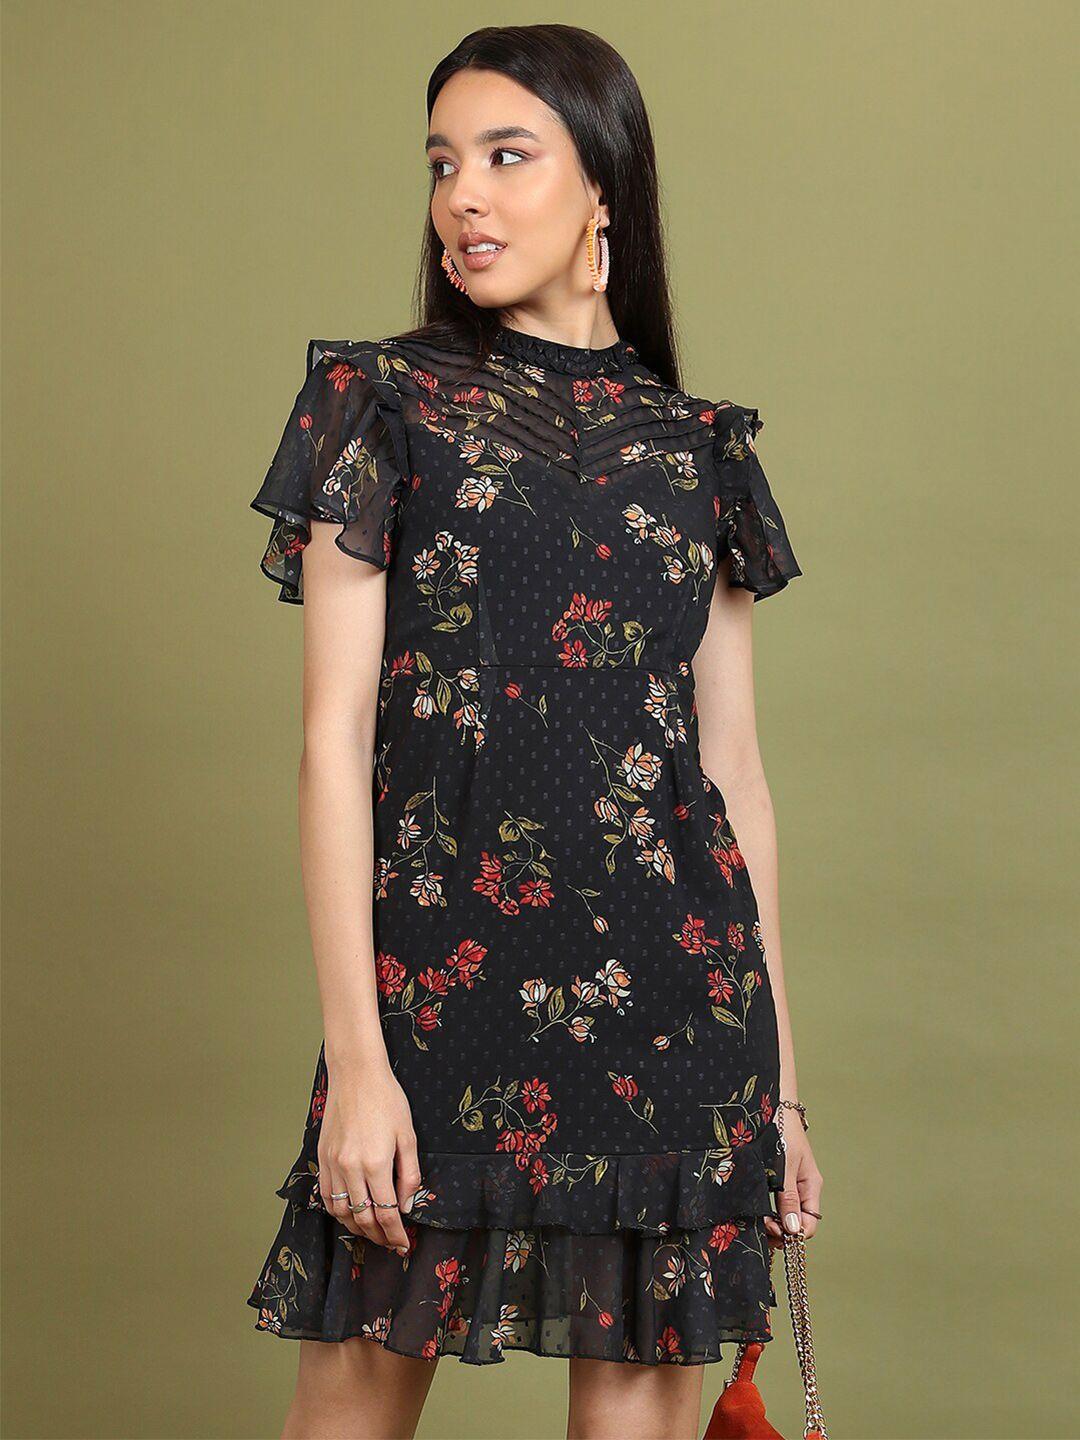 tokyo talkies black floral printed ruffled a-line dress